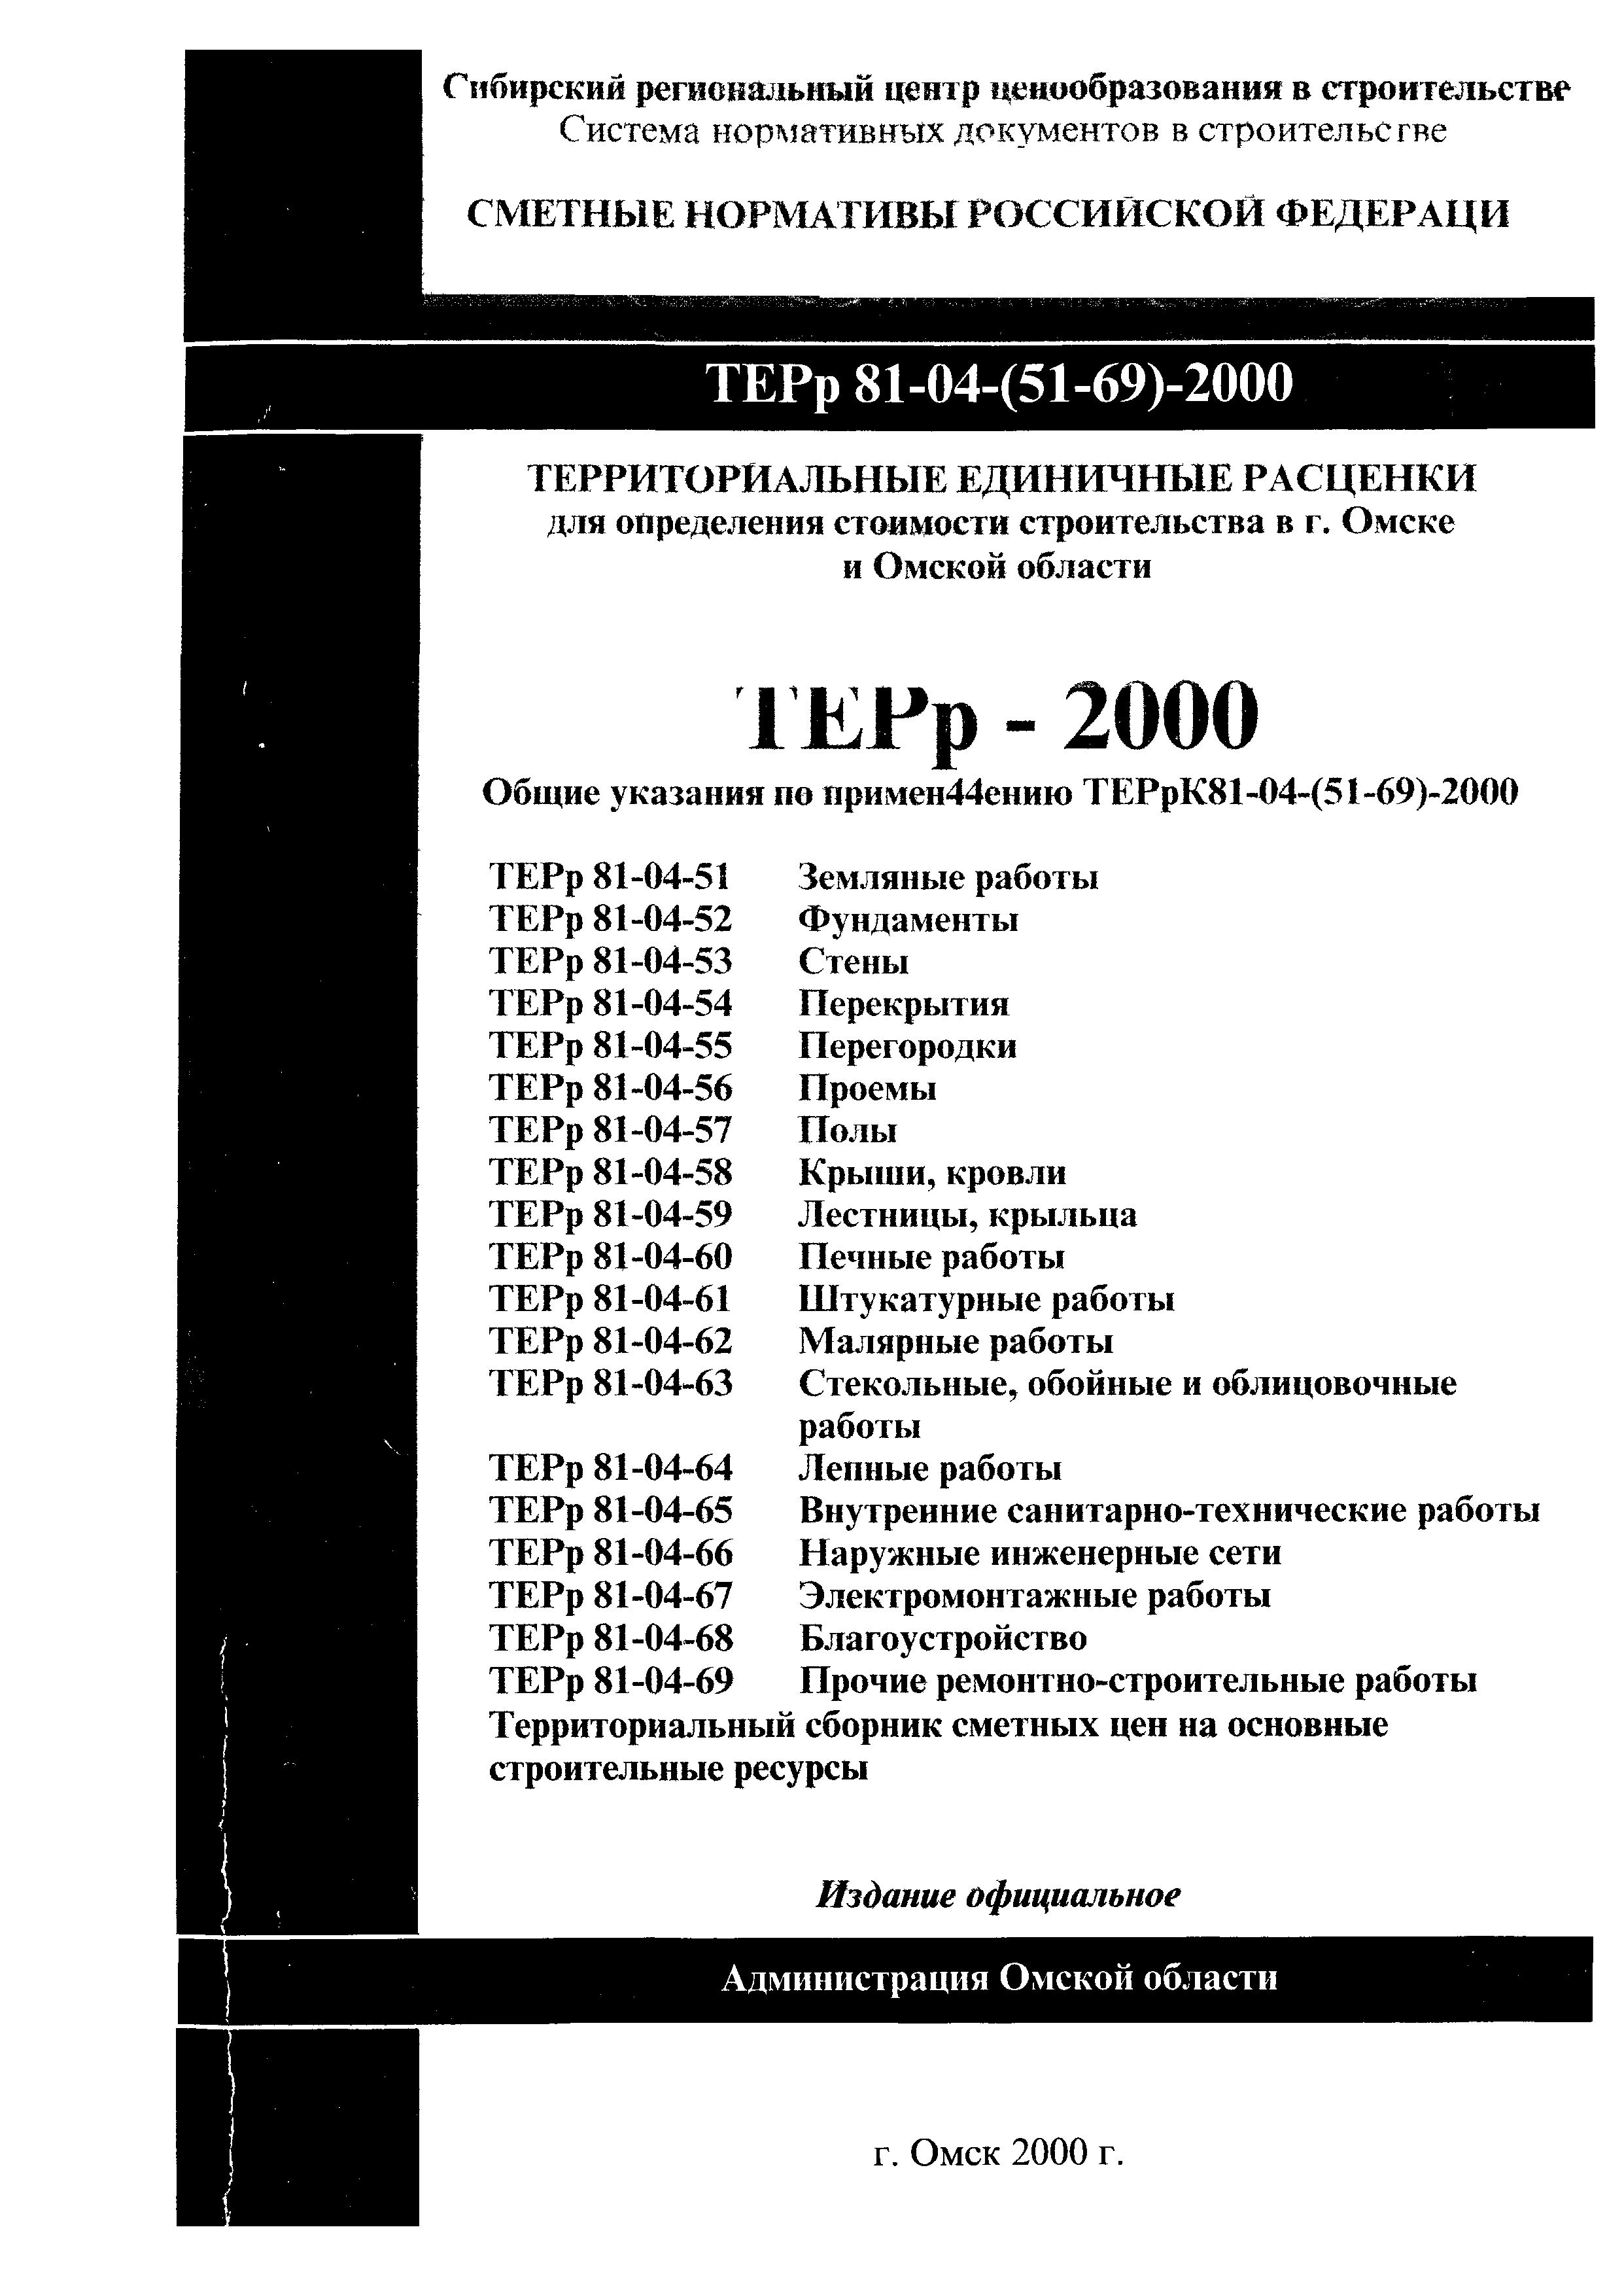 ТЕРр Омской области 2000-55